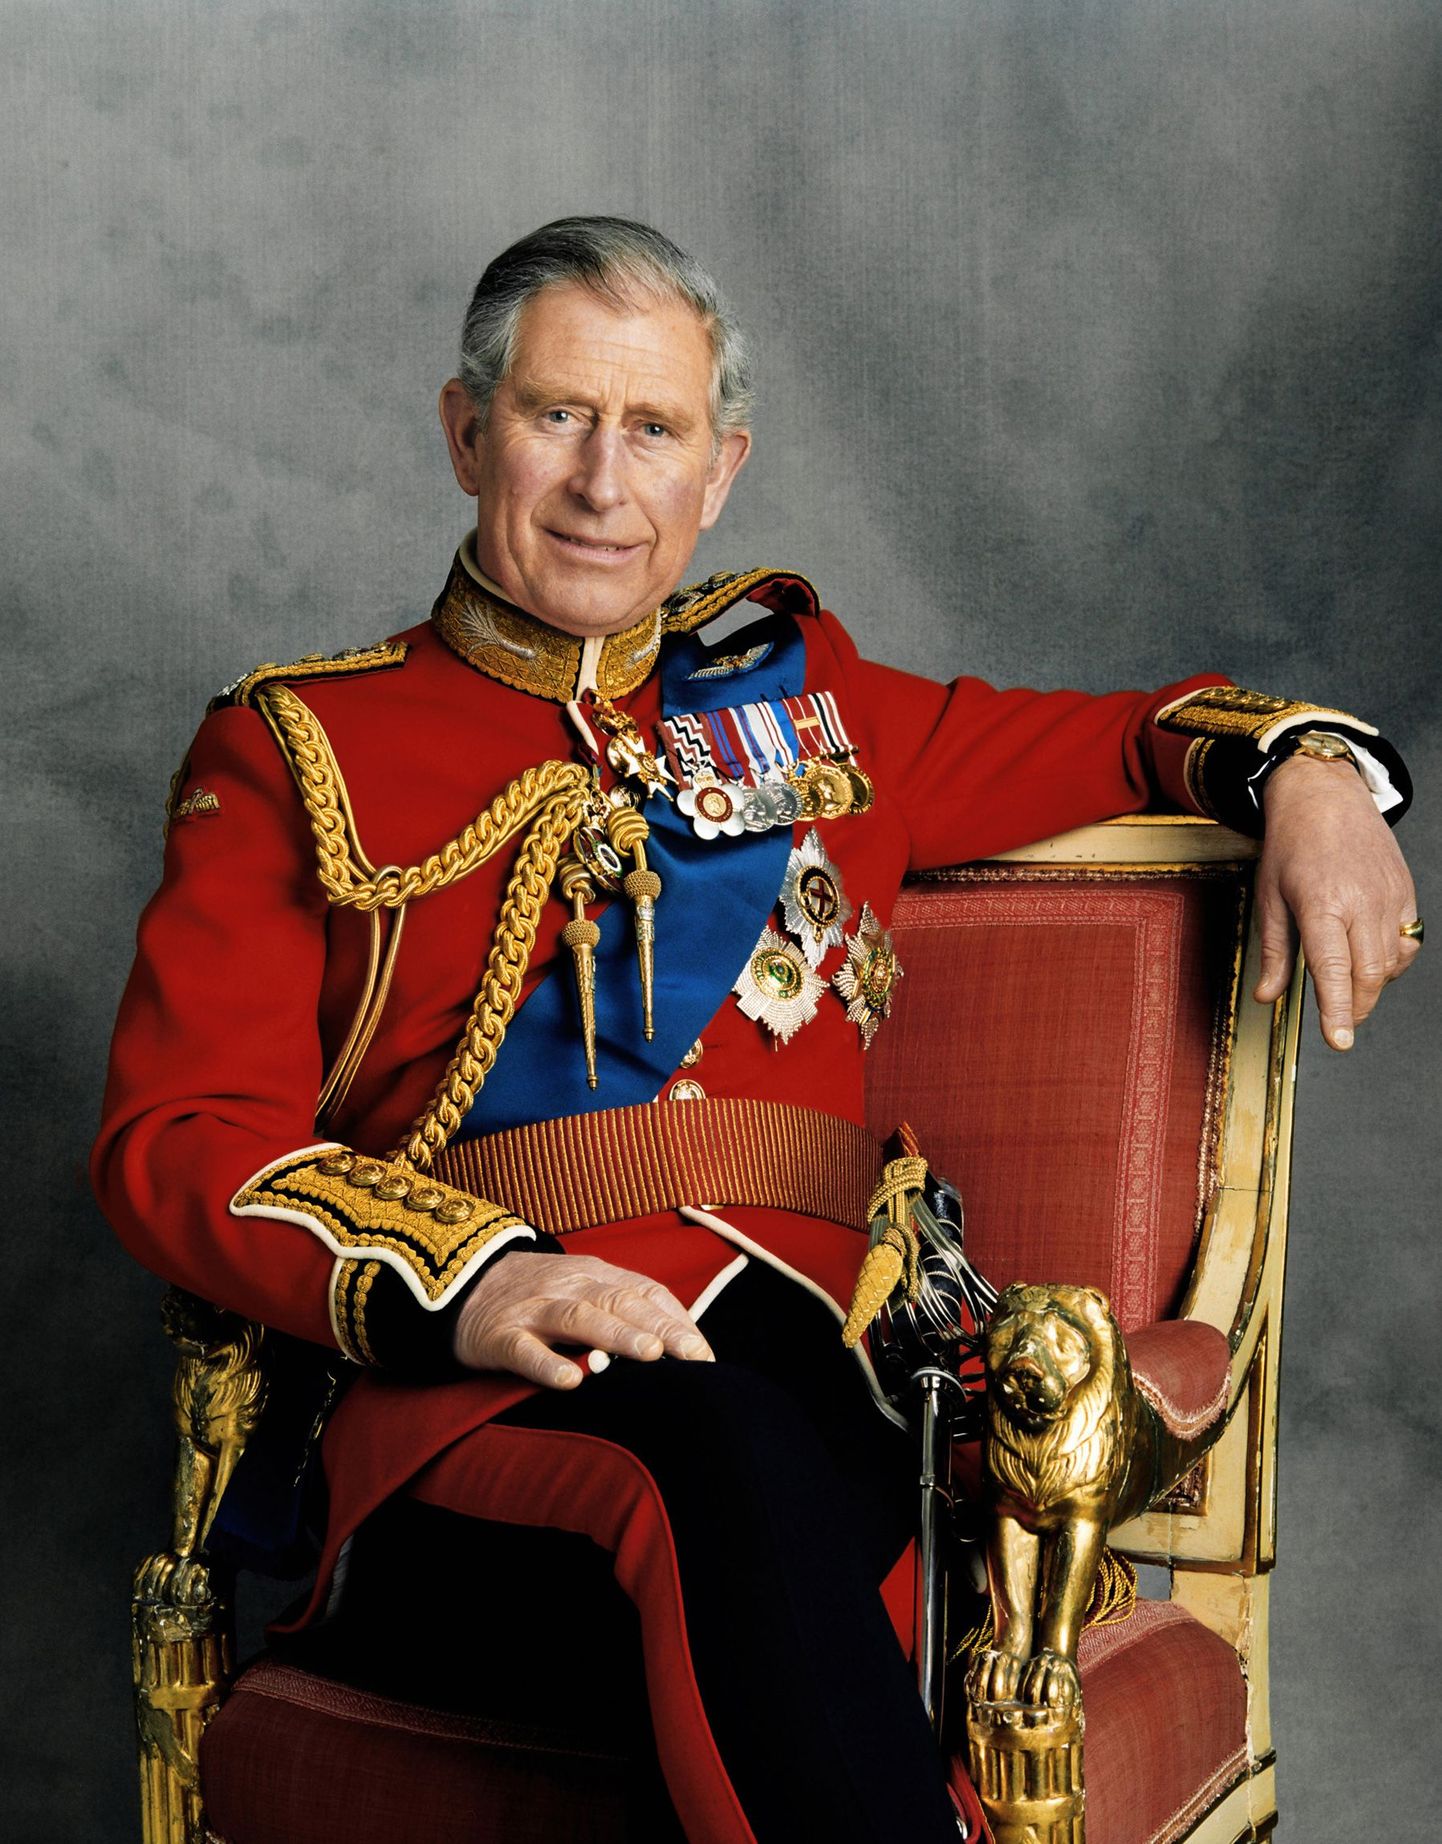 Walesi prints Charles Philip Arthur George Mountbatten-Windsor